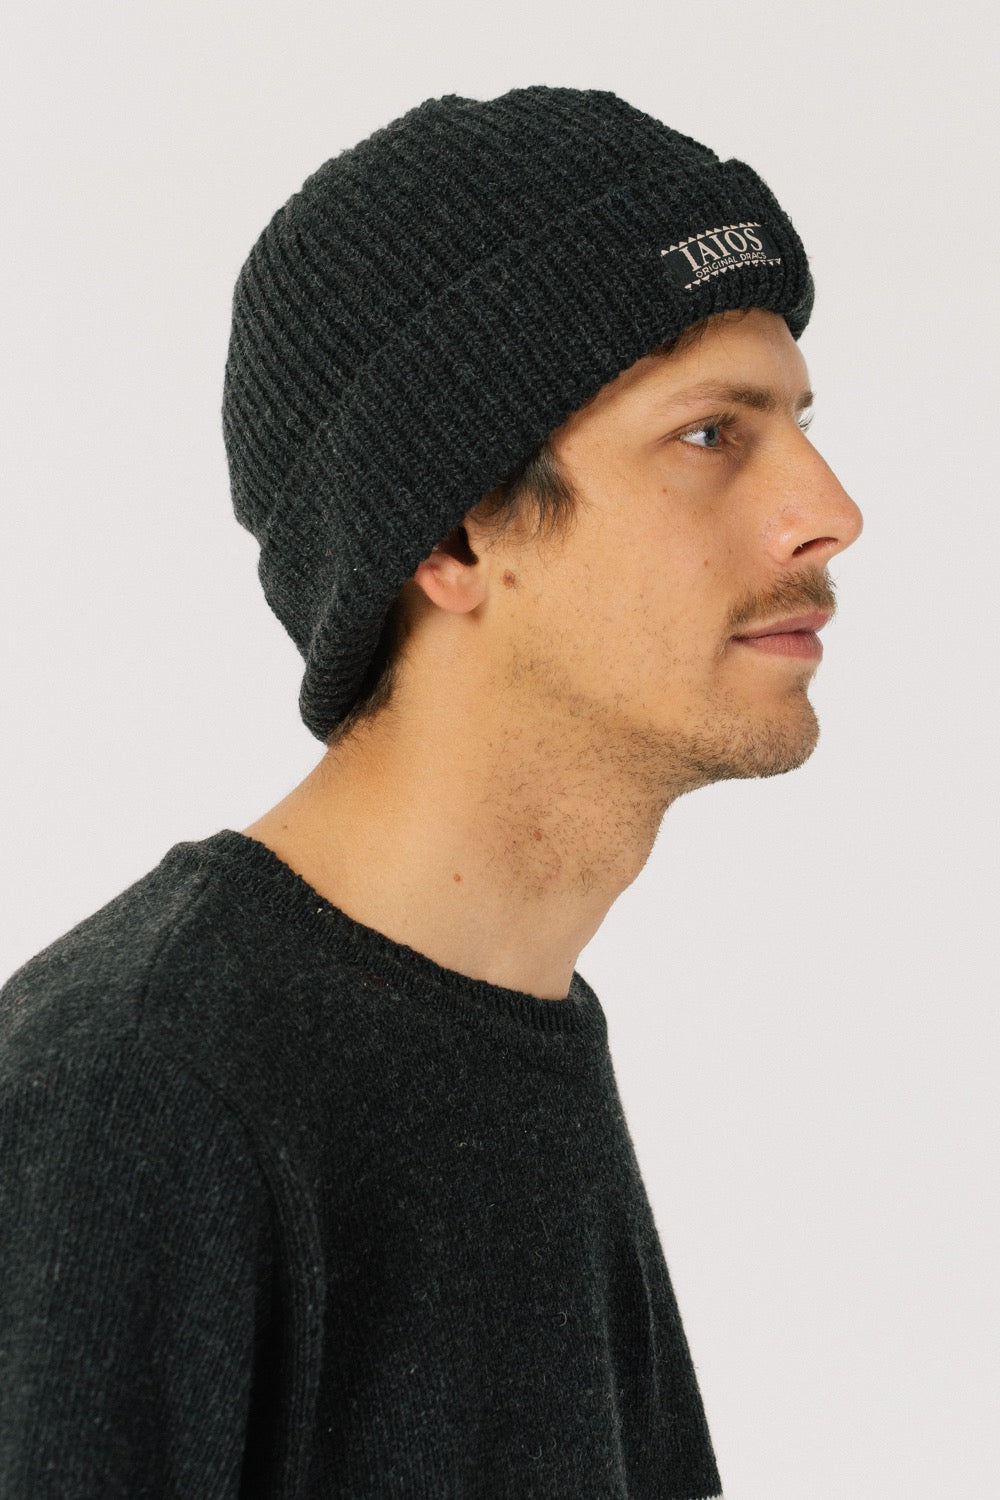 Model with black cap